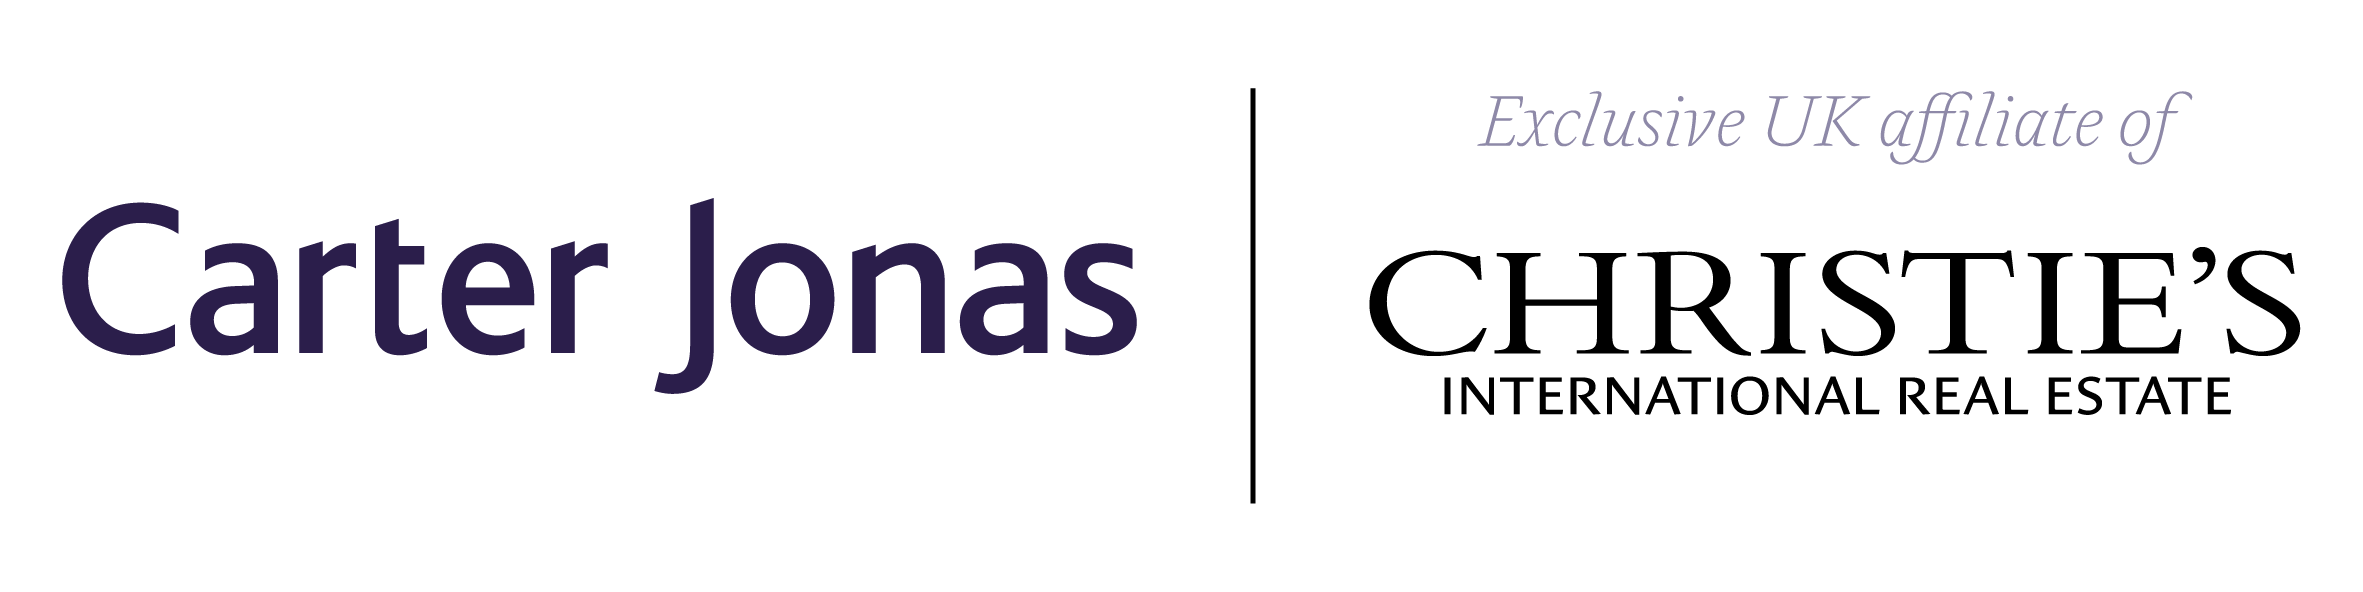 Carter Jonas and Christies Logo